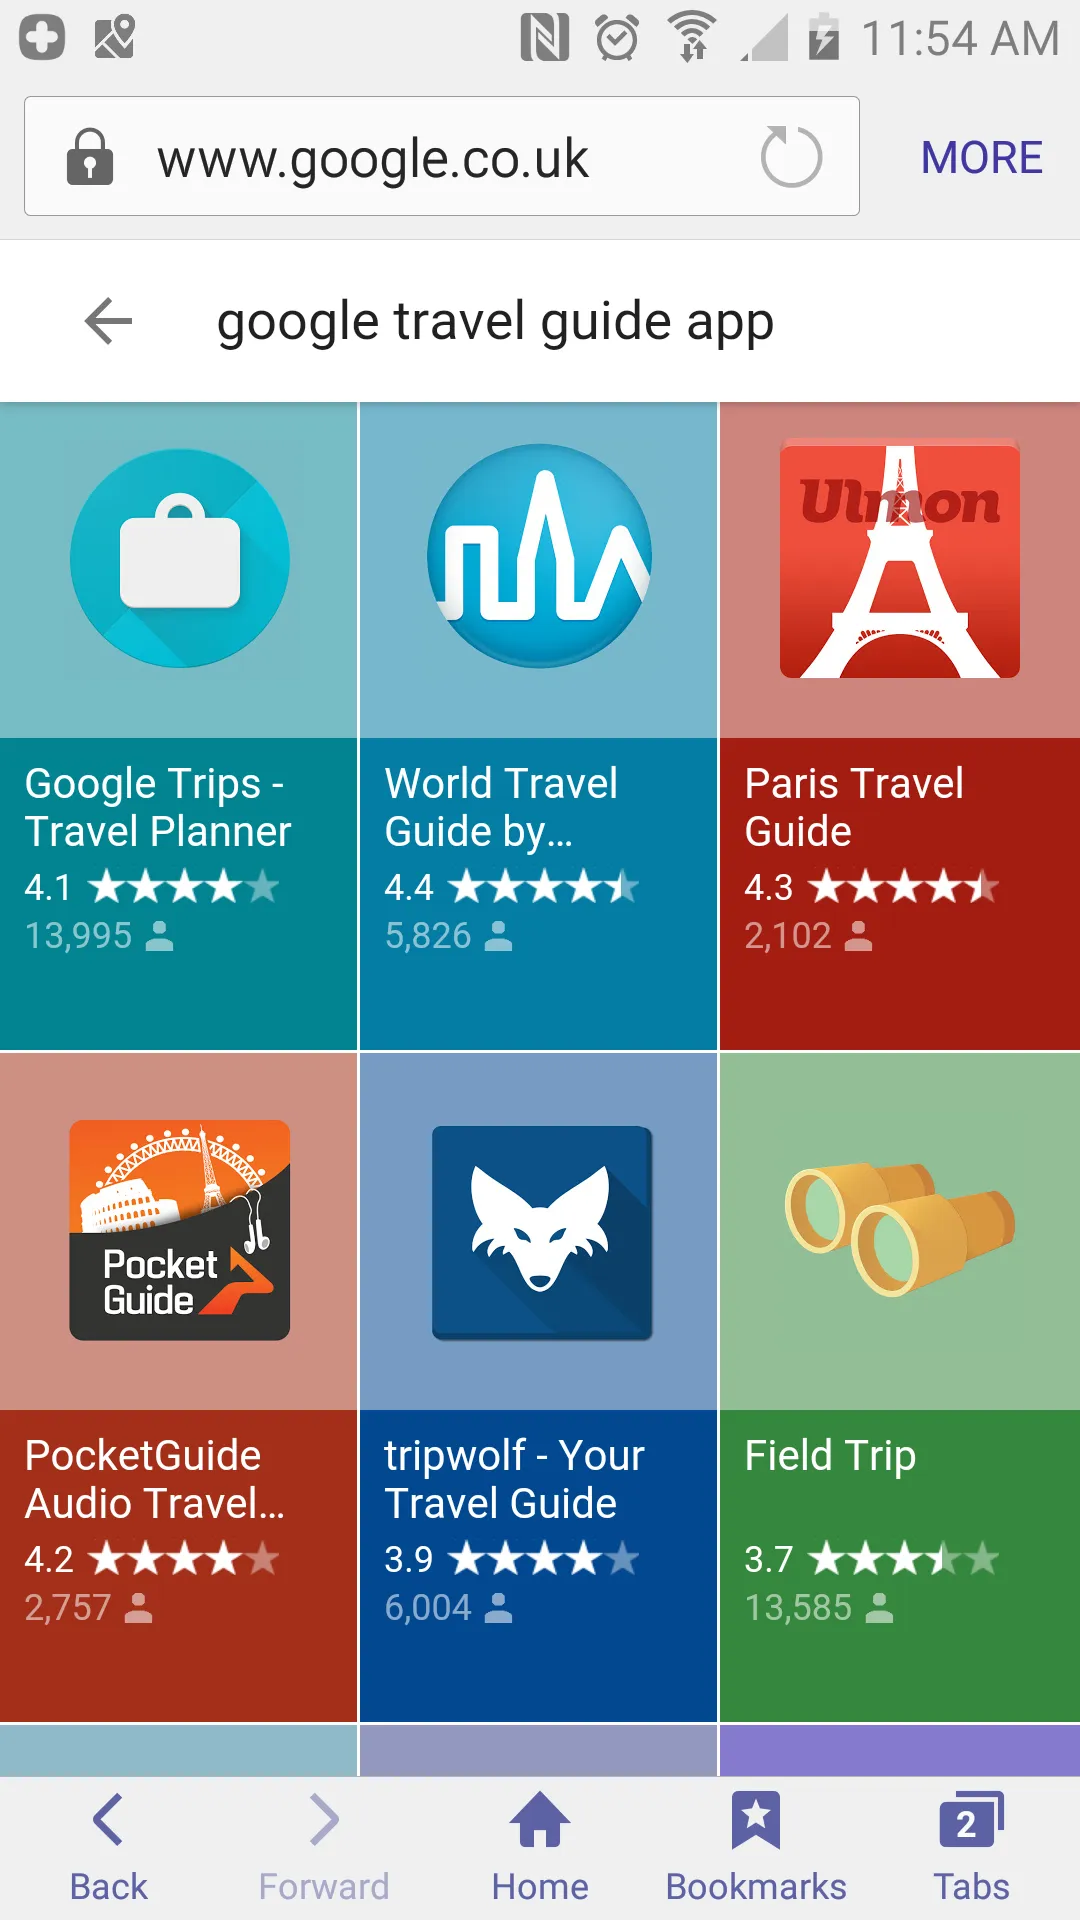 Google Travel Guide apps